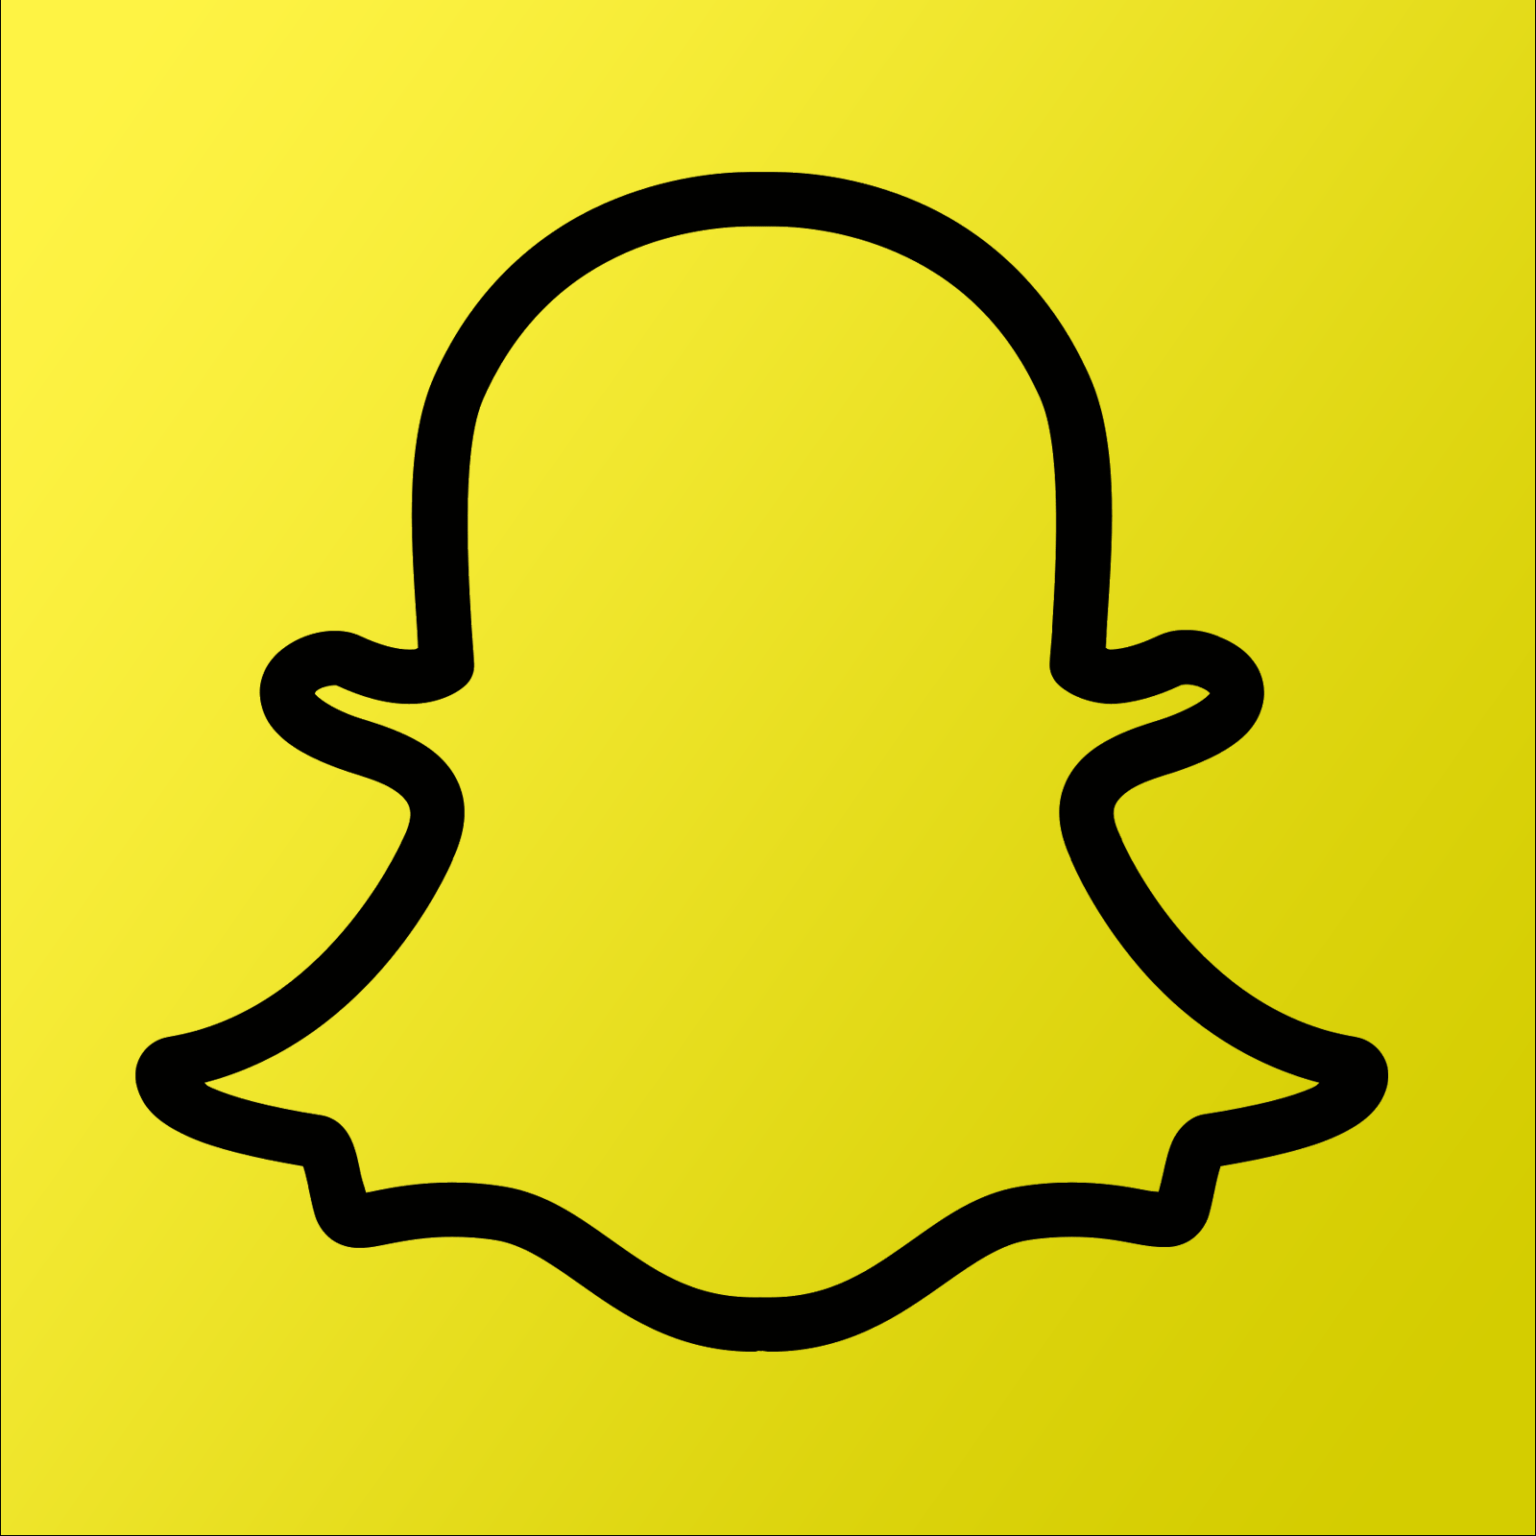 30 Logos snapchat stylé pour personnaliser votre profil